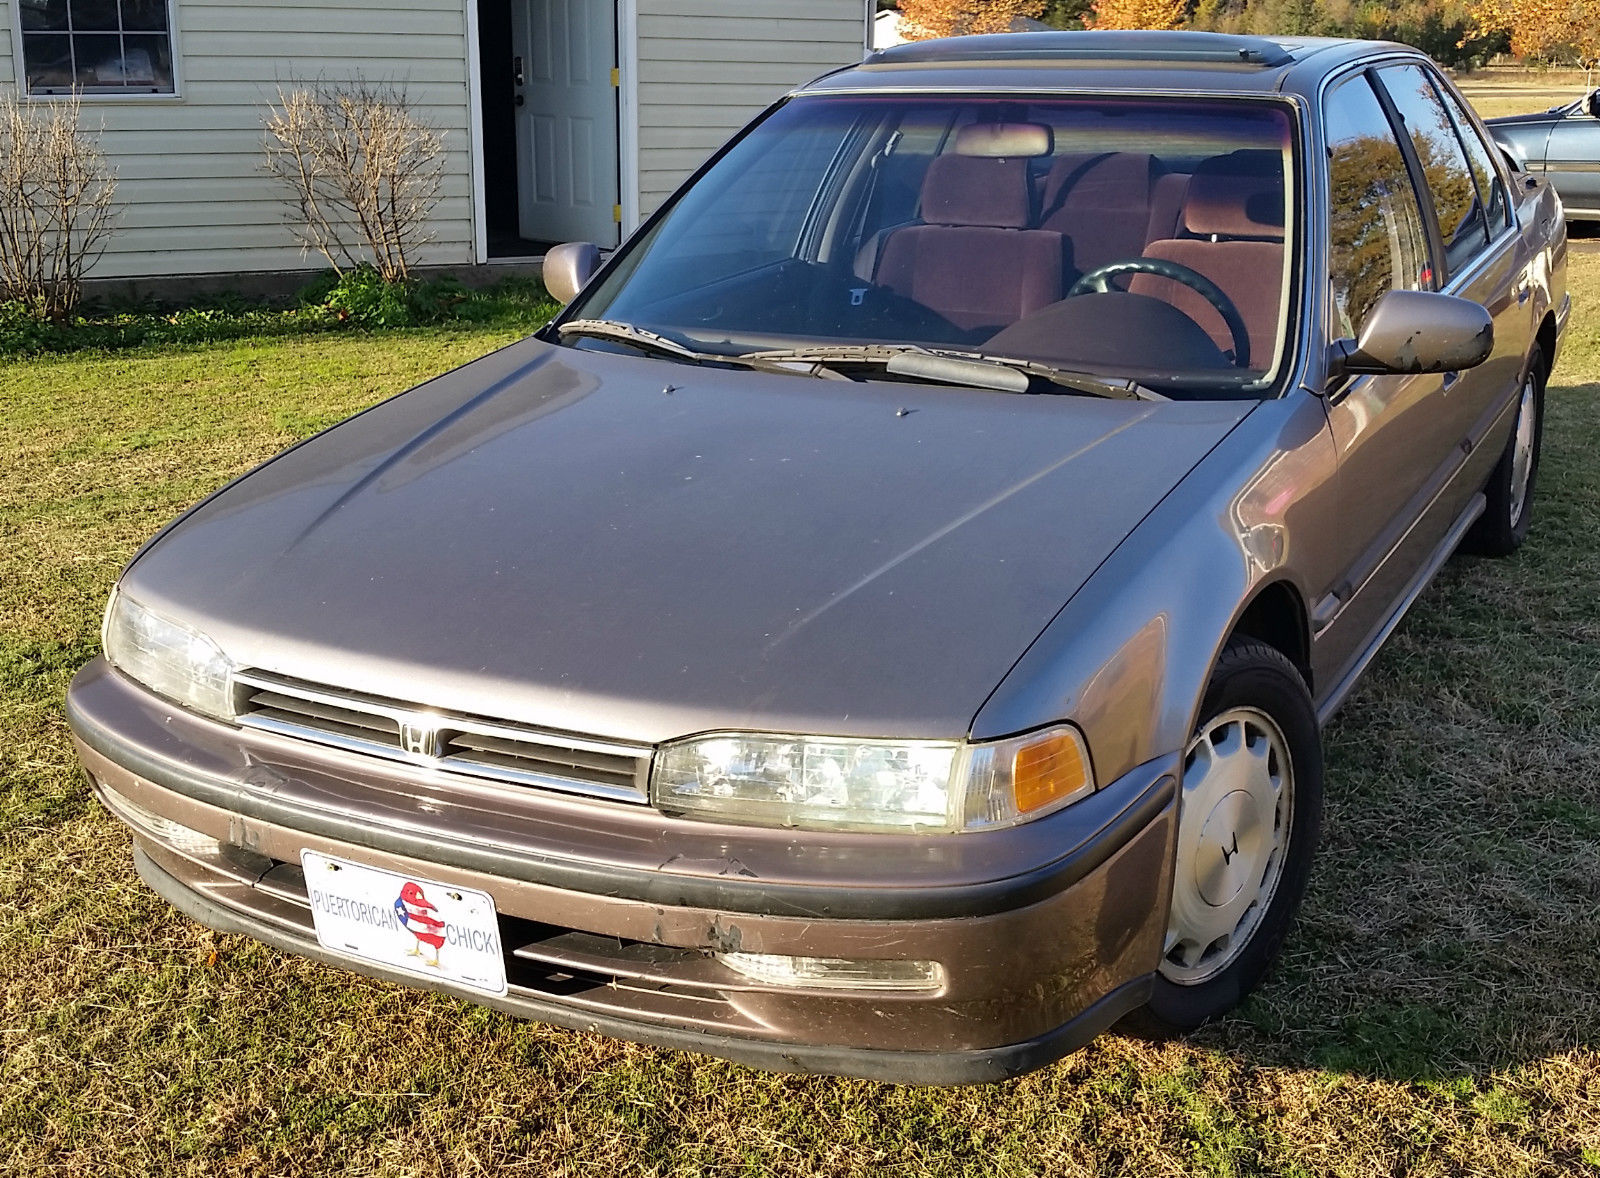 1992 Honda Accord for sale in Dardanelle, Arkansas, United States.